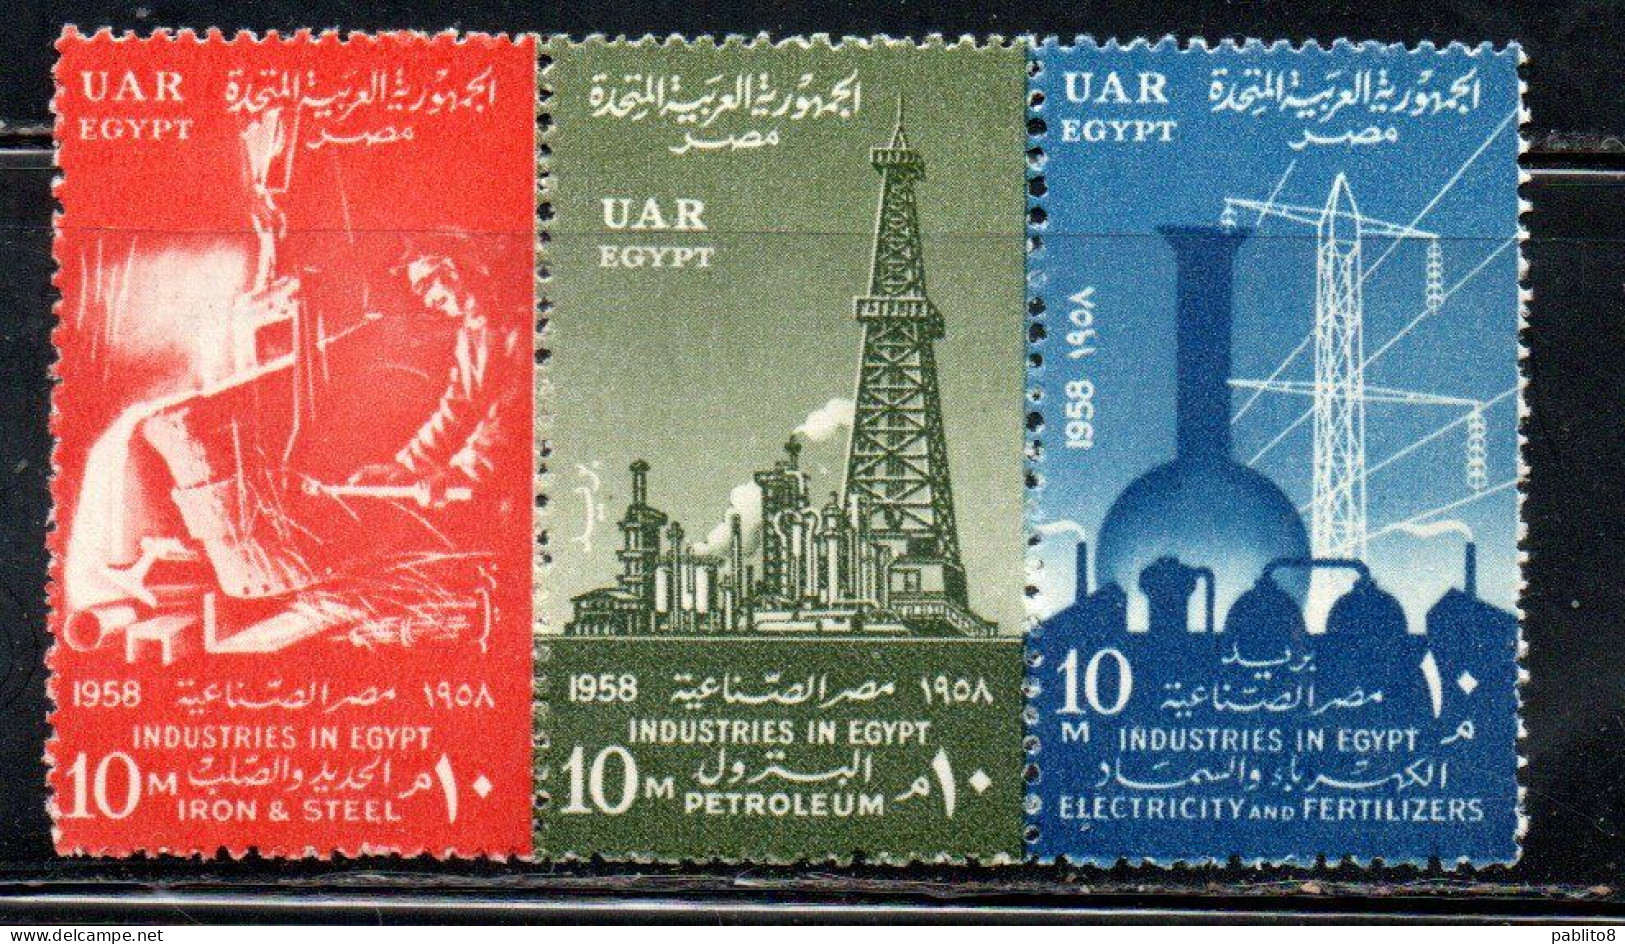 UAR EGYPT EGITTO 1958 INDUSTRIES IRON & STEEL + PETROLEUM OIL + ELECTRICITY AND FERTILIZERS INDUSTRY 10m  MNH - Neufs